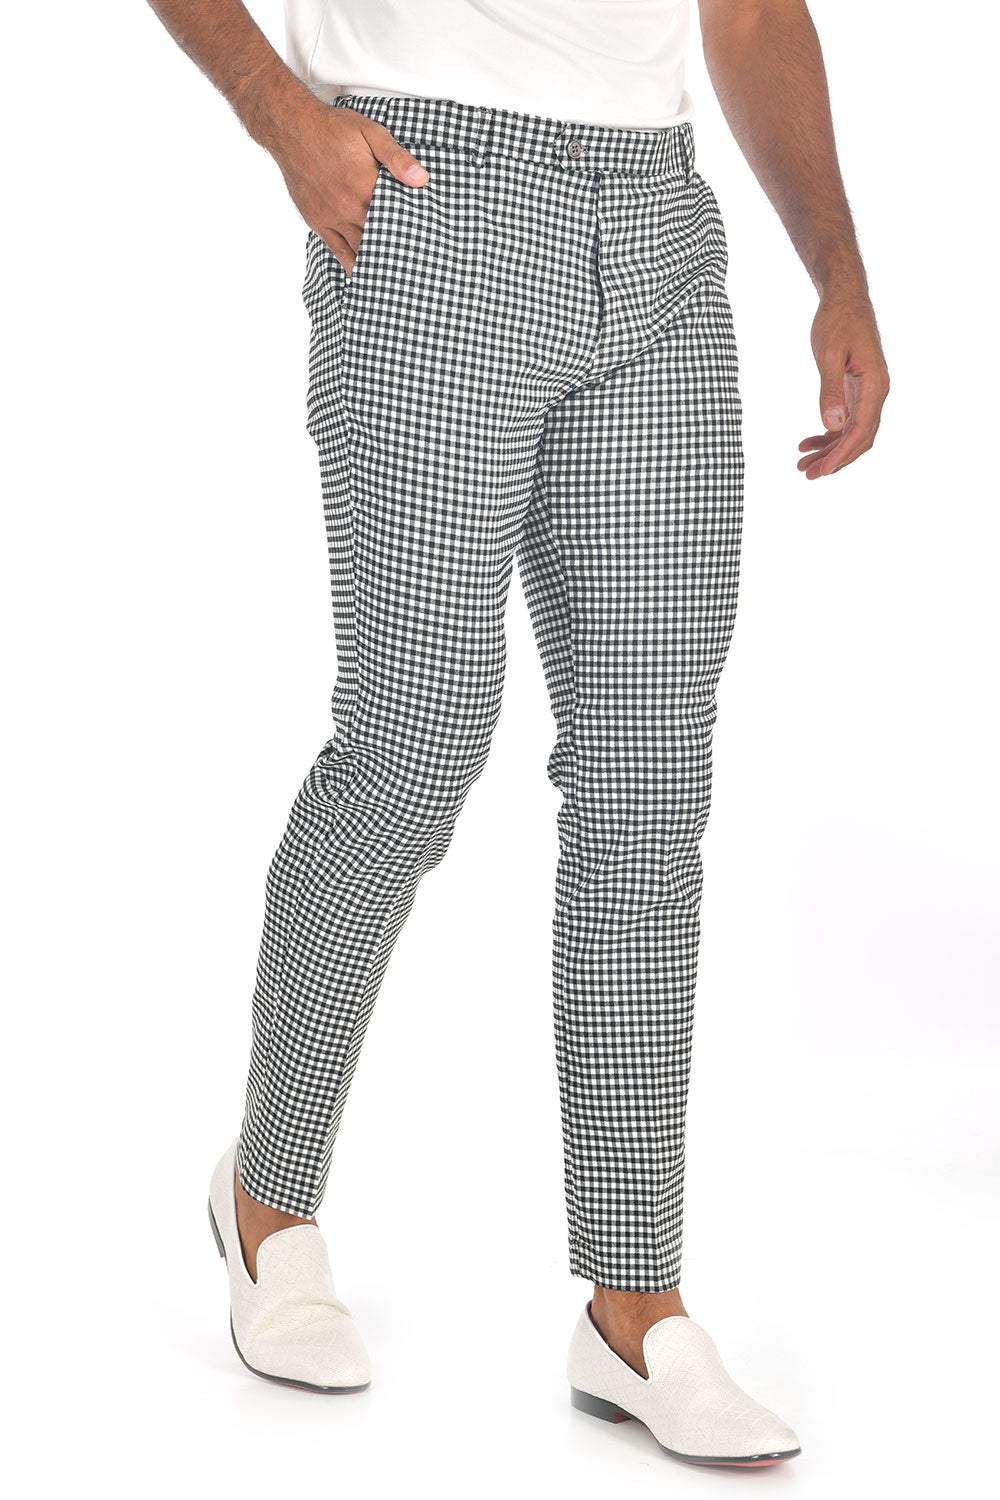 BARABAS men's checkered plaid Black and White chino pants CP92